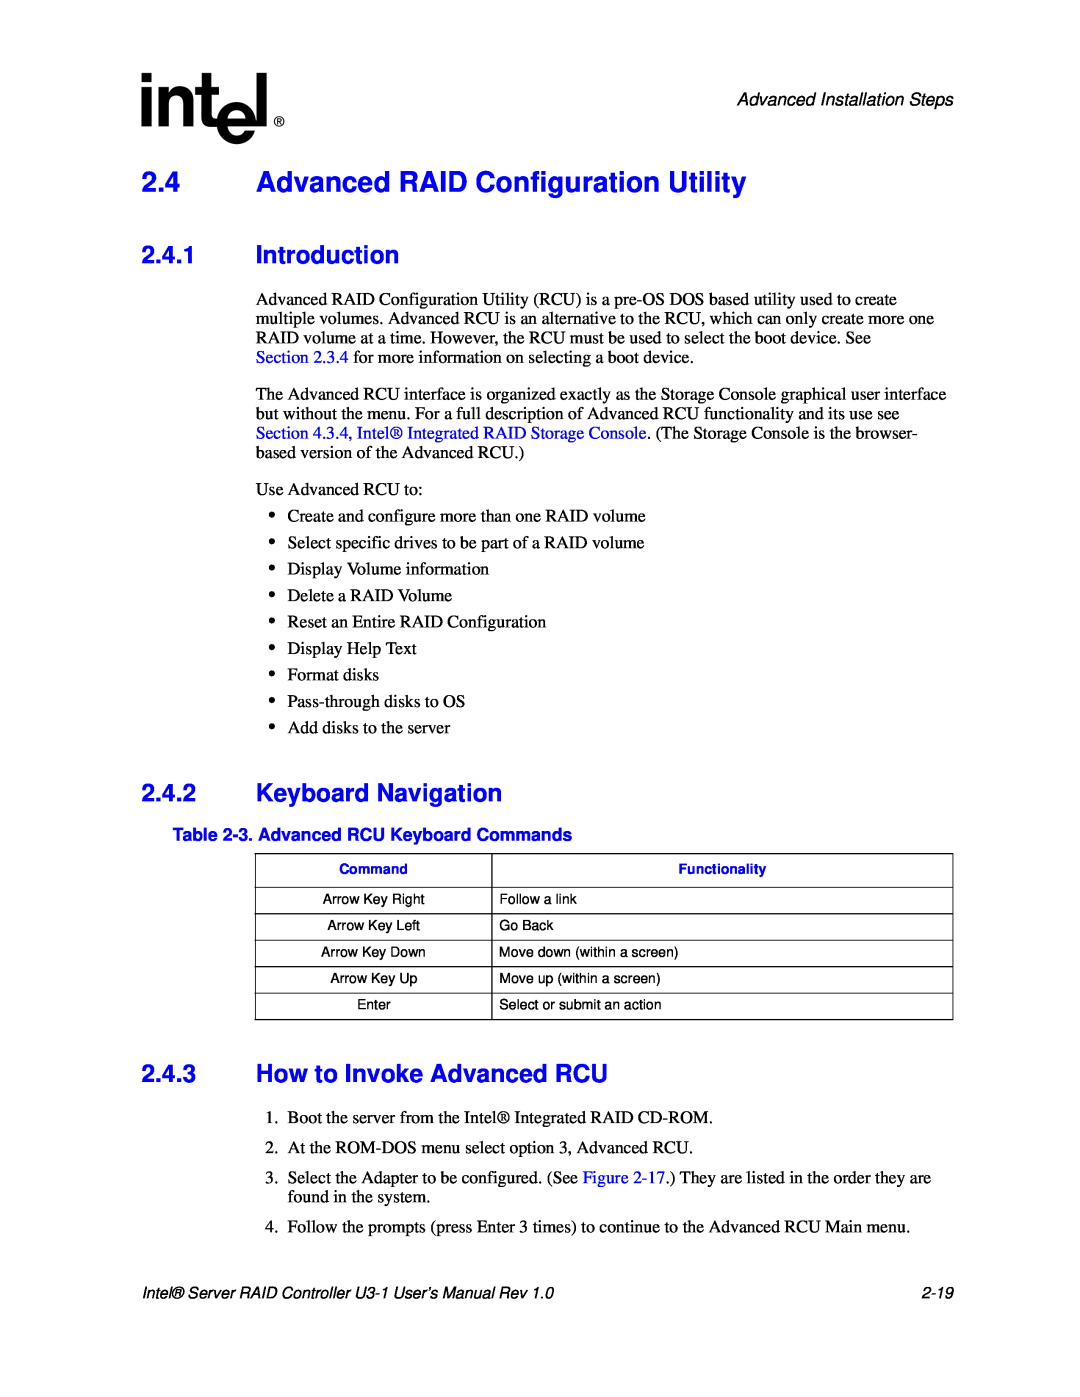 Intel SRCU31 user manual 2.4Advanced RAID Configuration Utility, 2.4.1Introduction, 2.4.2Keyboard Navigation 